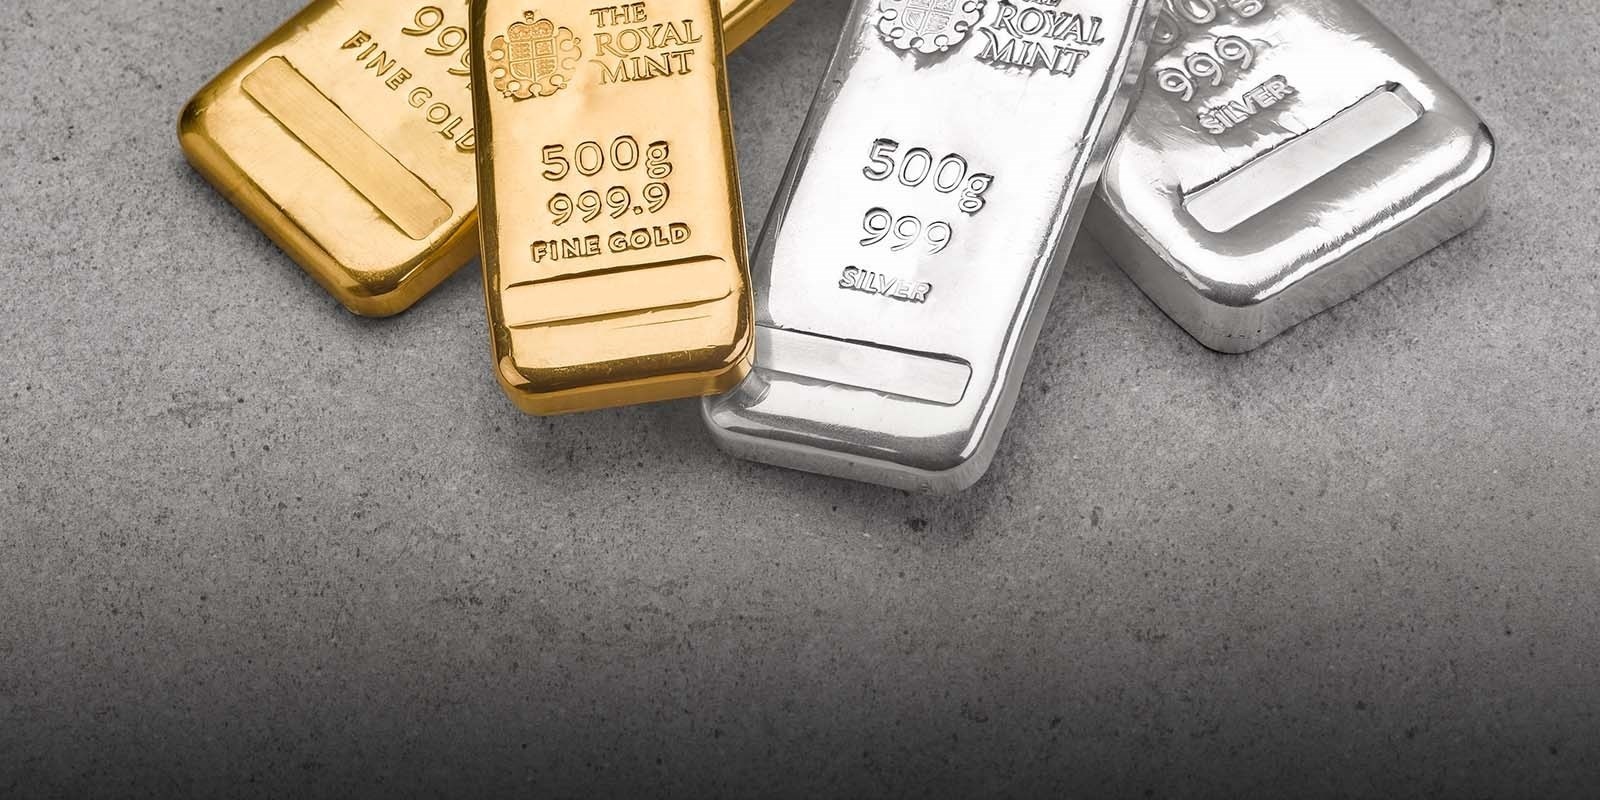 Royal Mint – Silver and gold bars (shop illustration) (zoom)